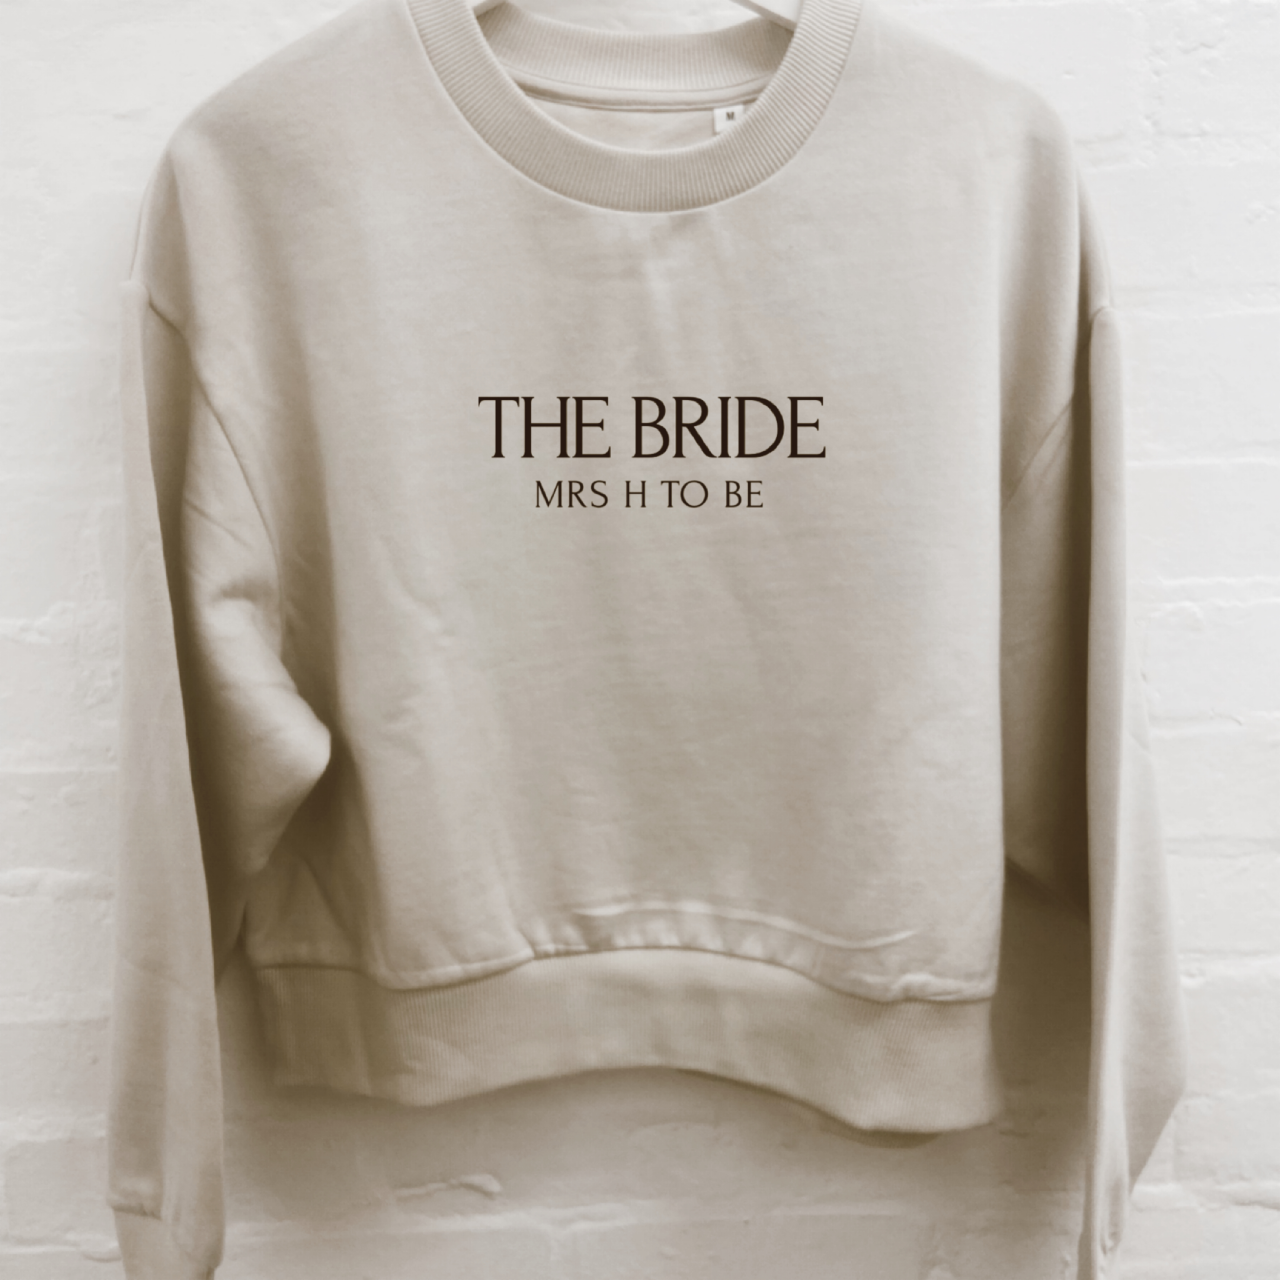 The bride personalised oversized cropped sweatshirt